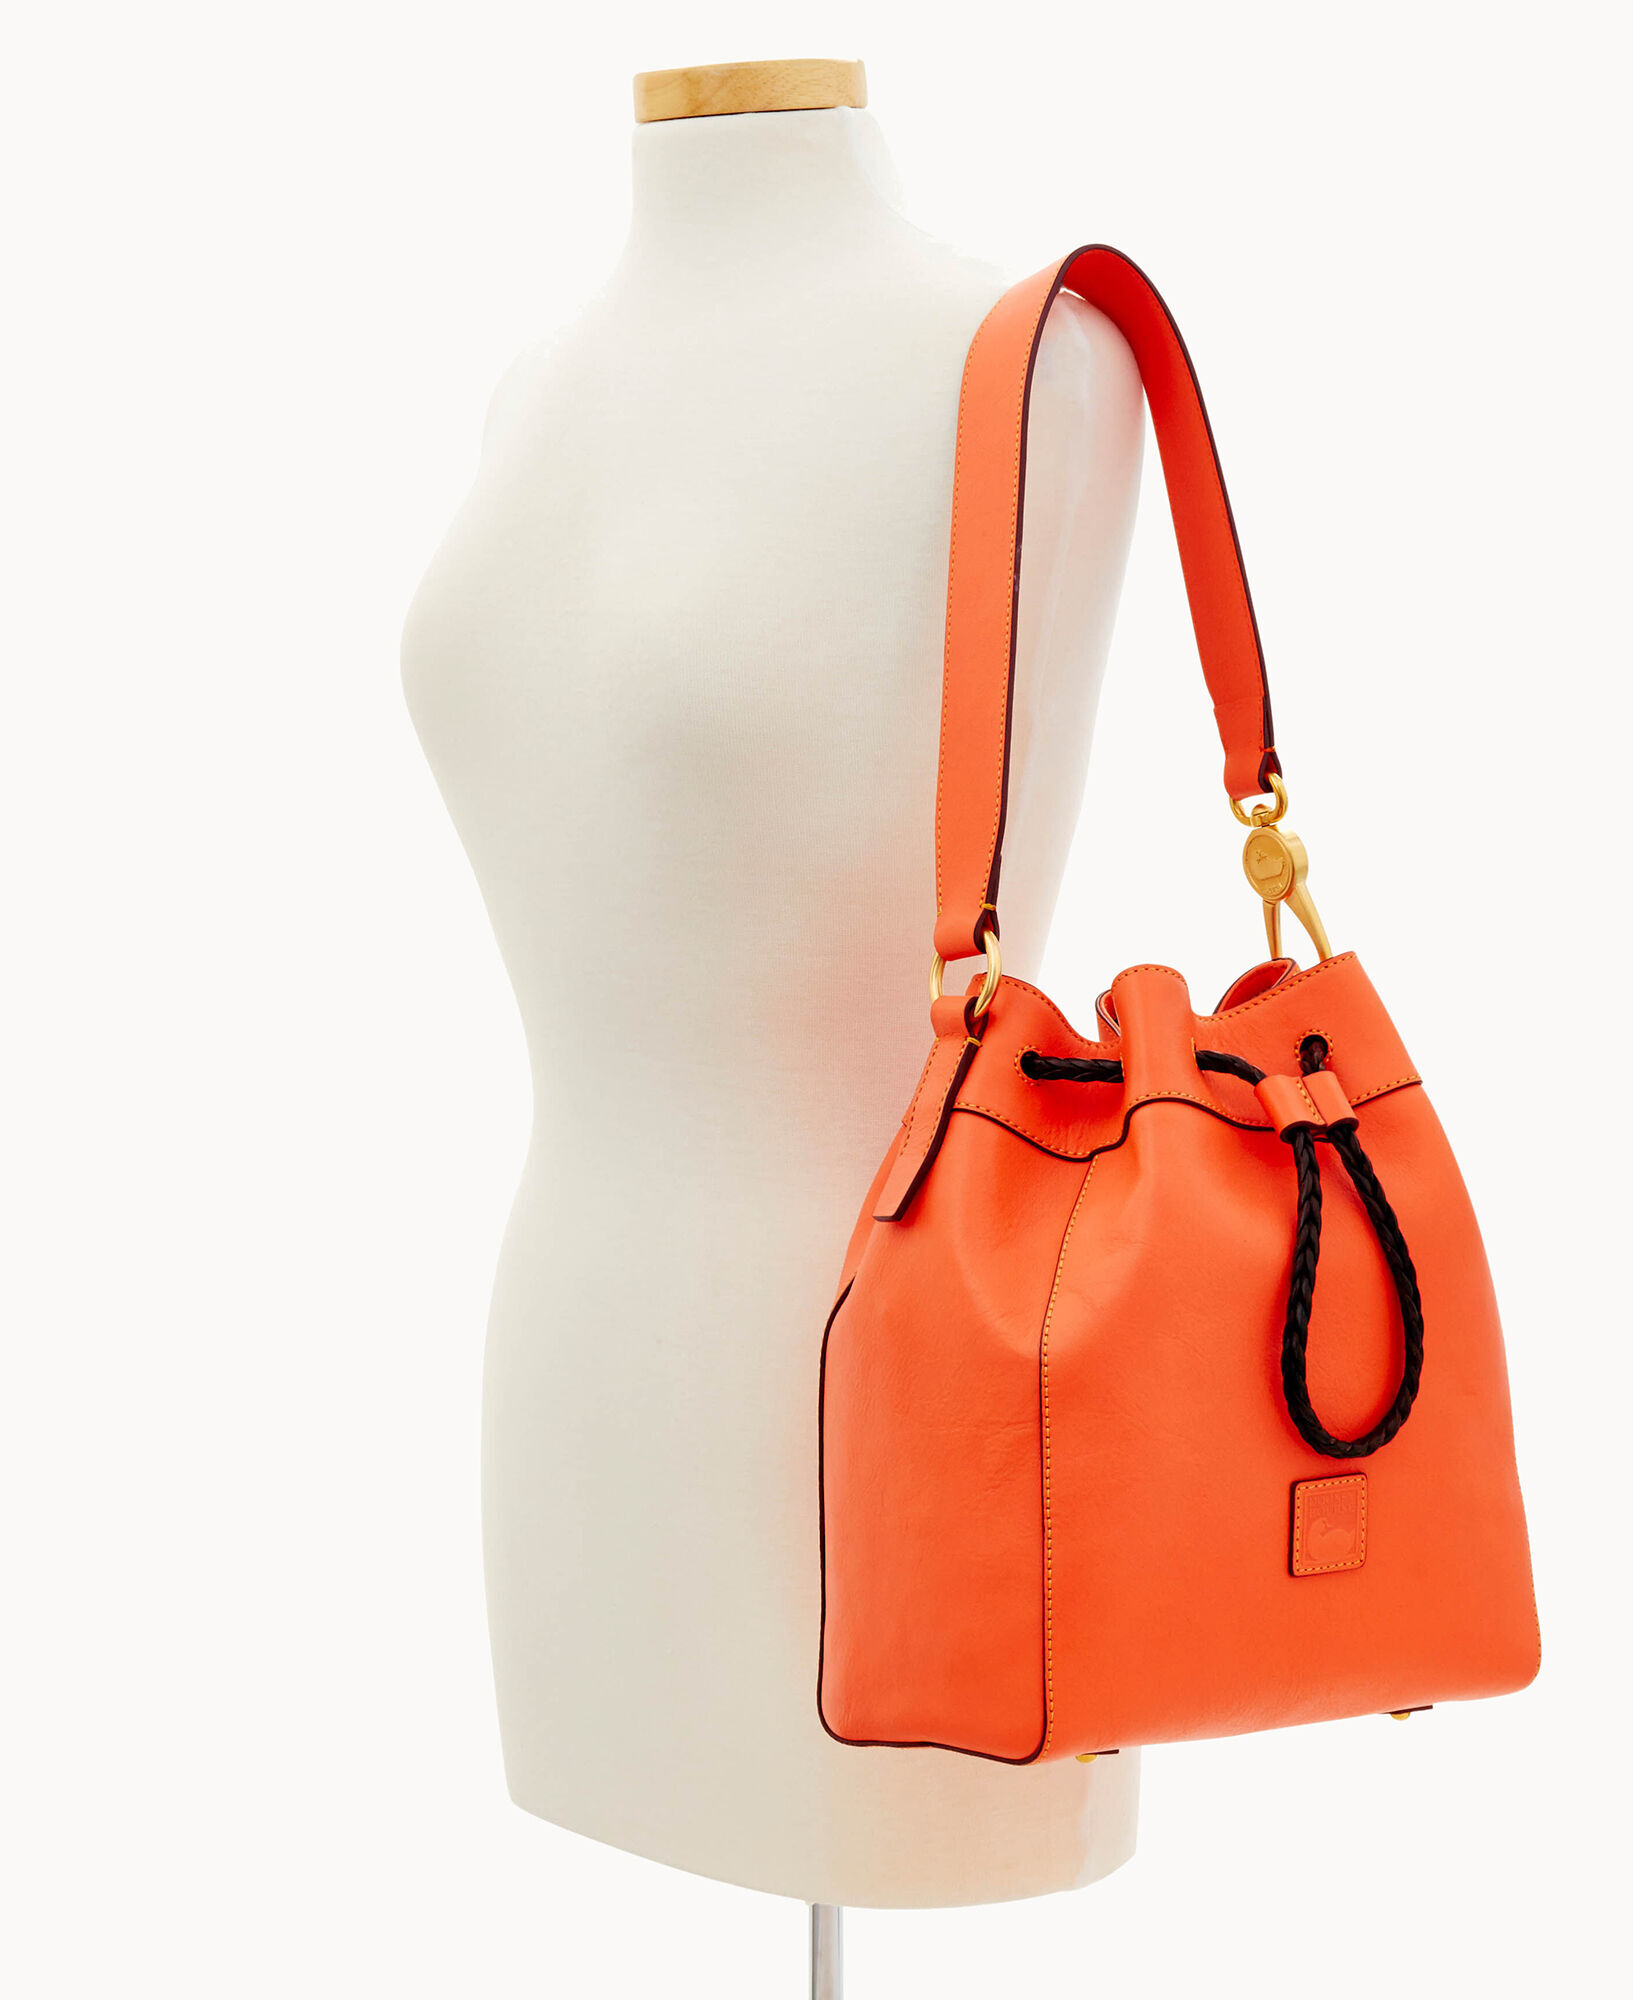 Vintage embossed elephants oversized orange leather handbags